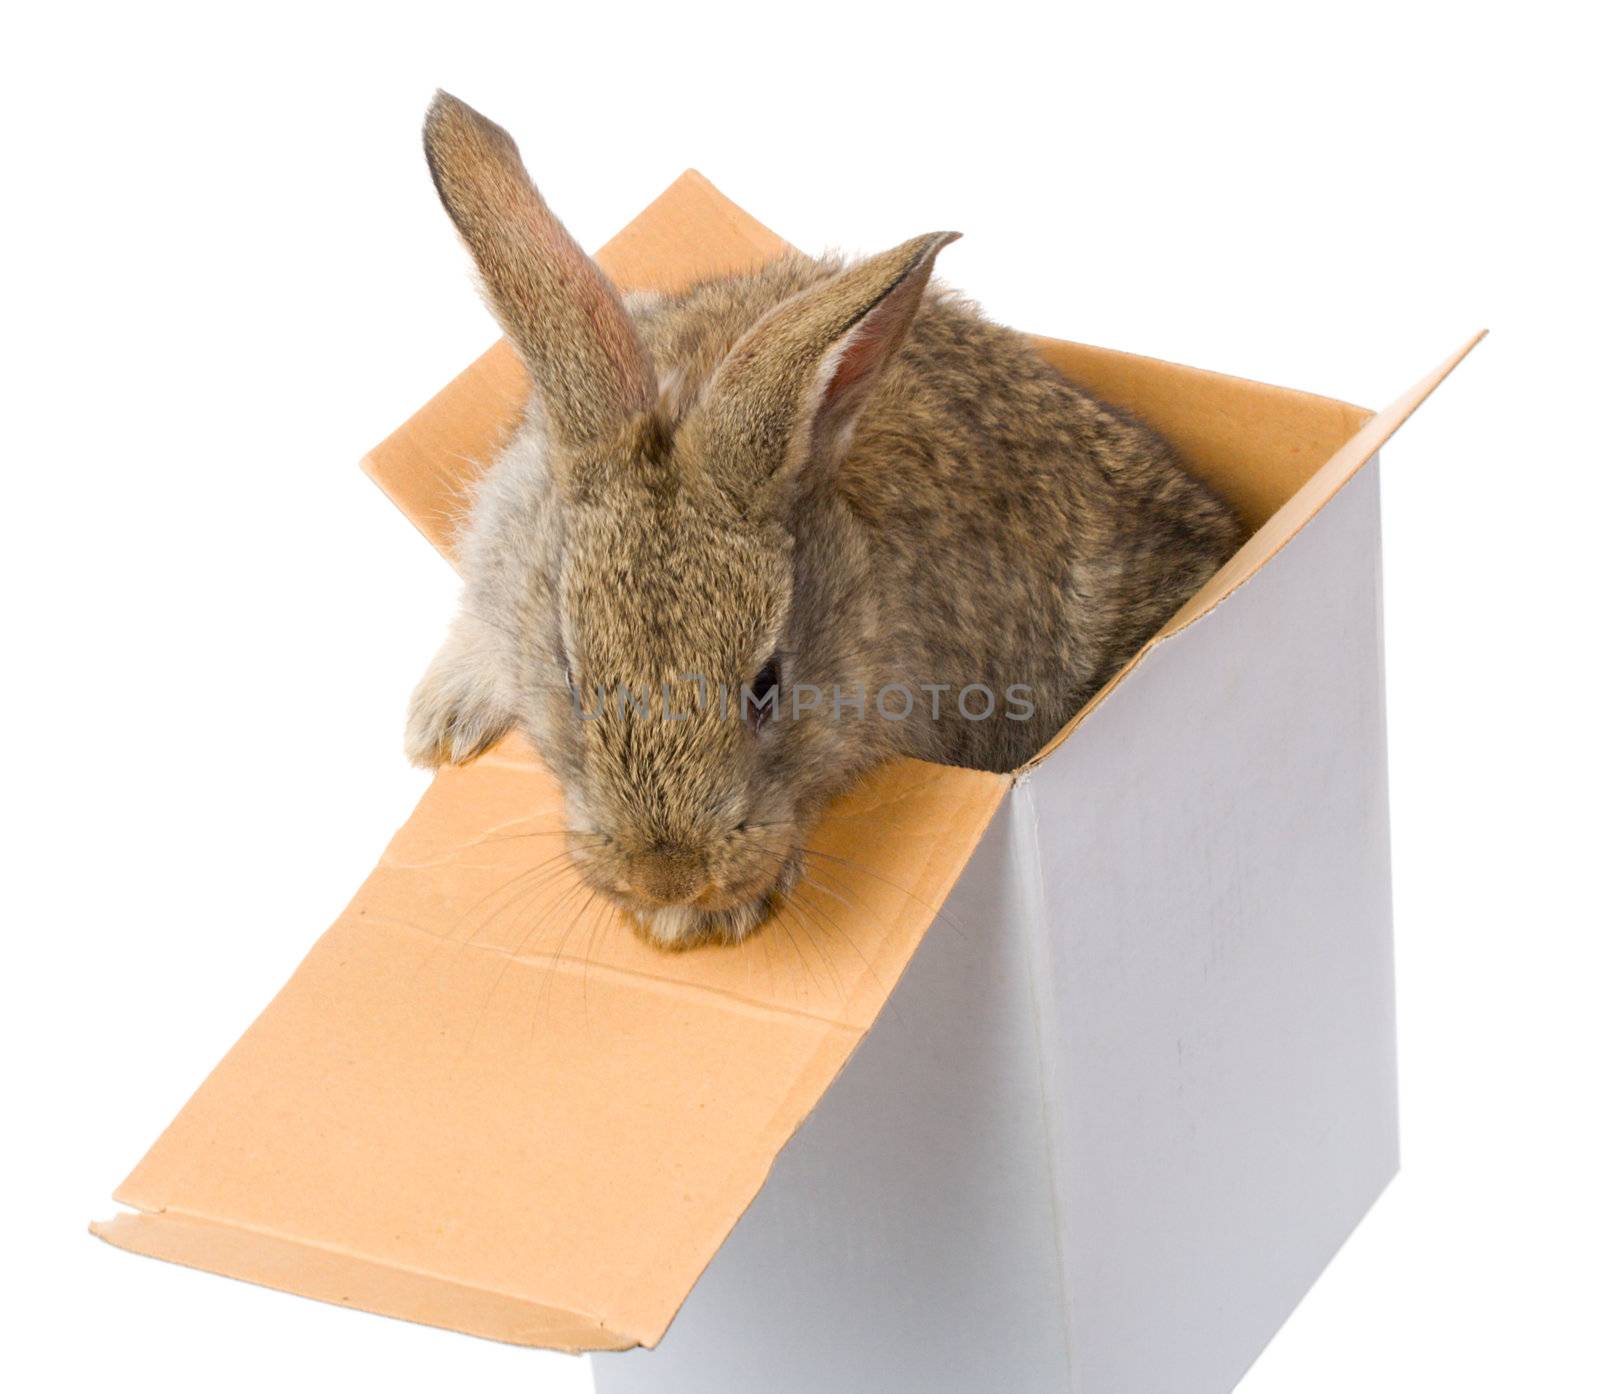 close-up bunny on box by Alekcey